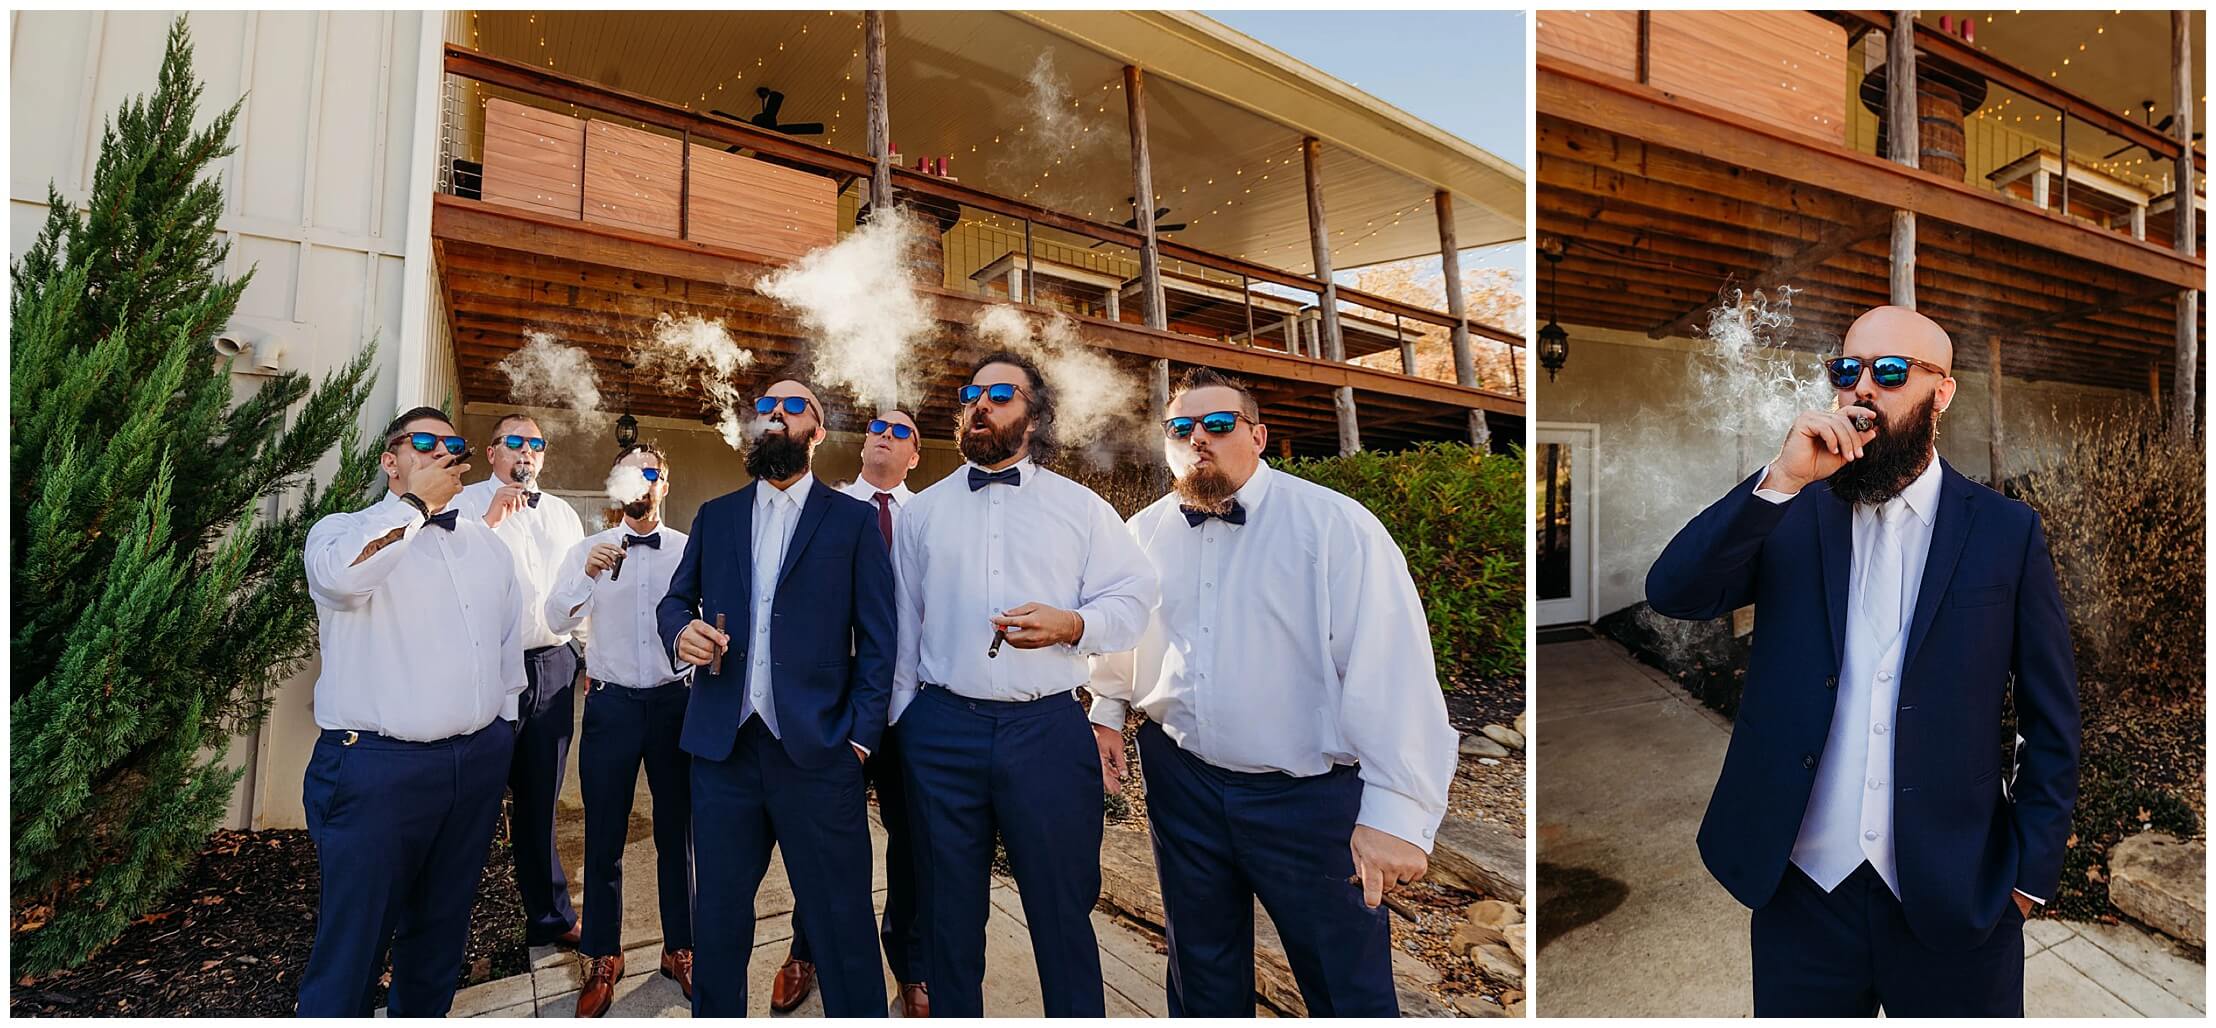 Groom and groomsmen smoking outside of wedding venue